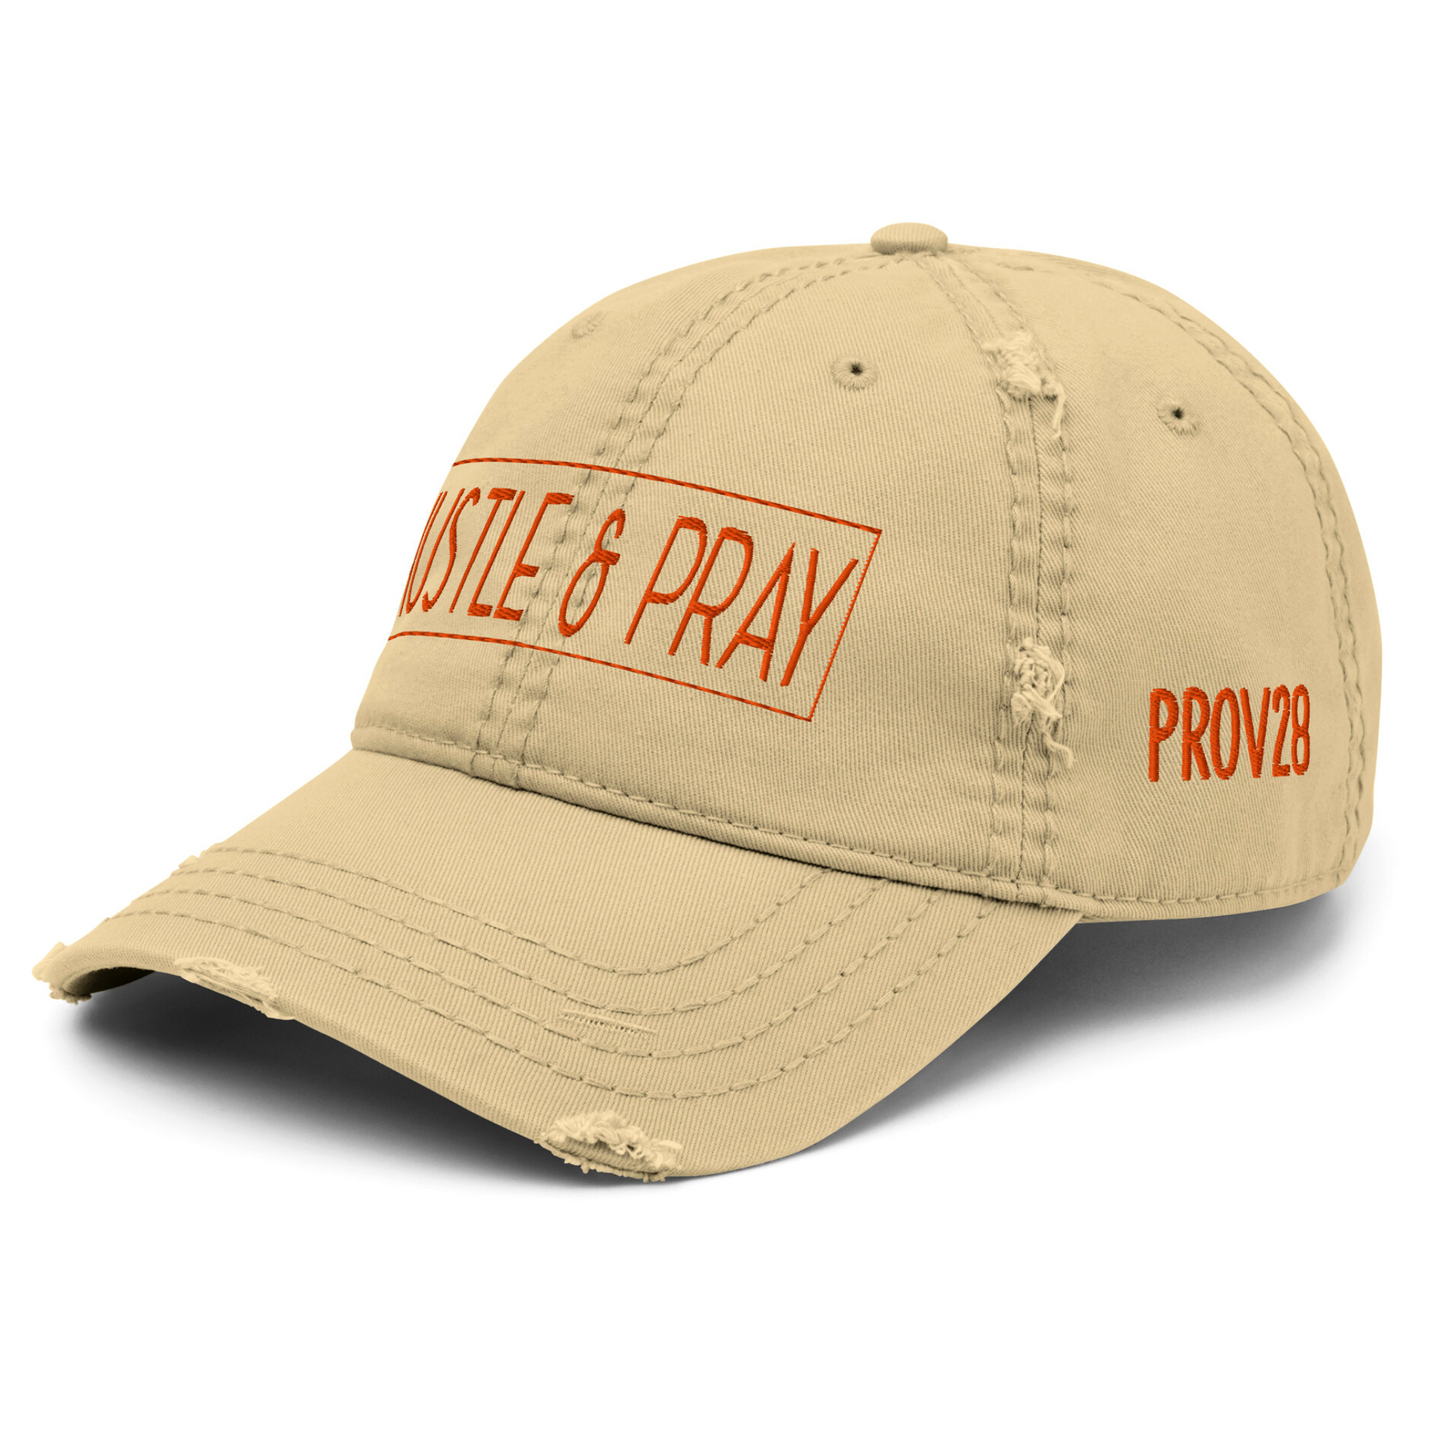 HUSTLE & PRAY - Tan & Orange Embroidered Distressed Dad Hat